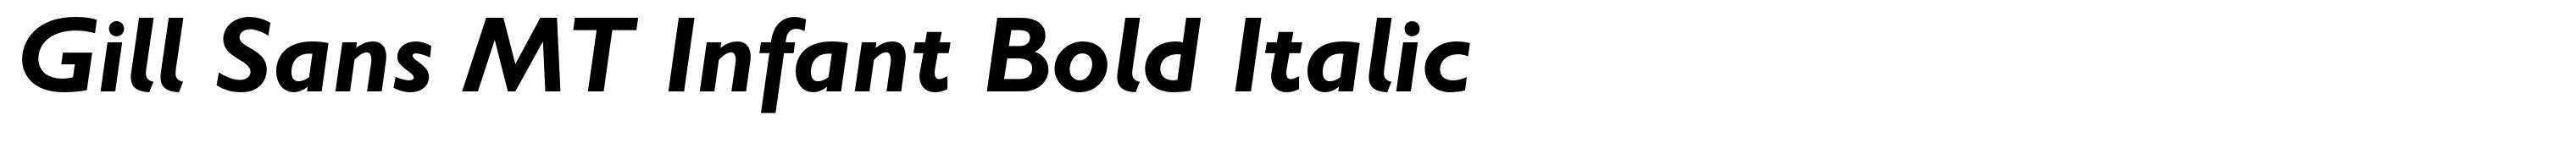 Gill Sans MT Infant Bold Italic